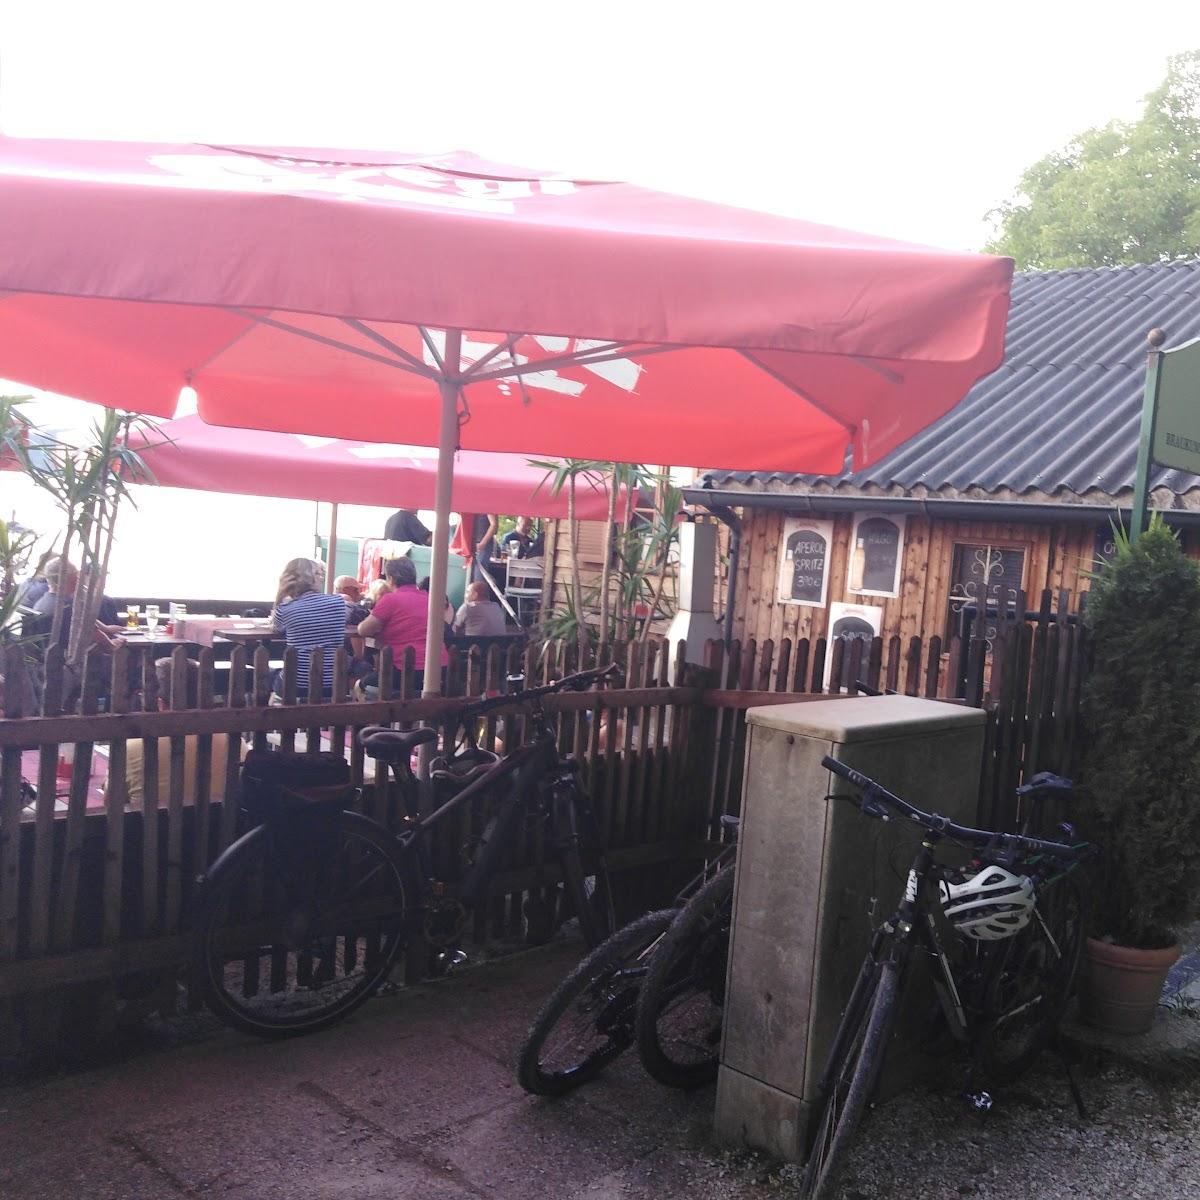 Restaurant "Stegerl am See" in Bayerham